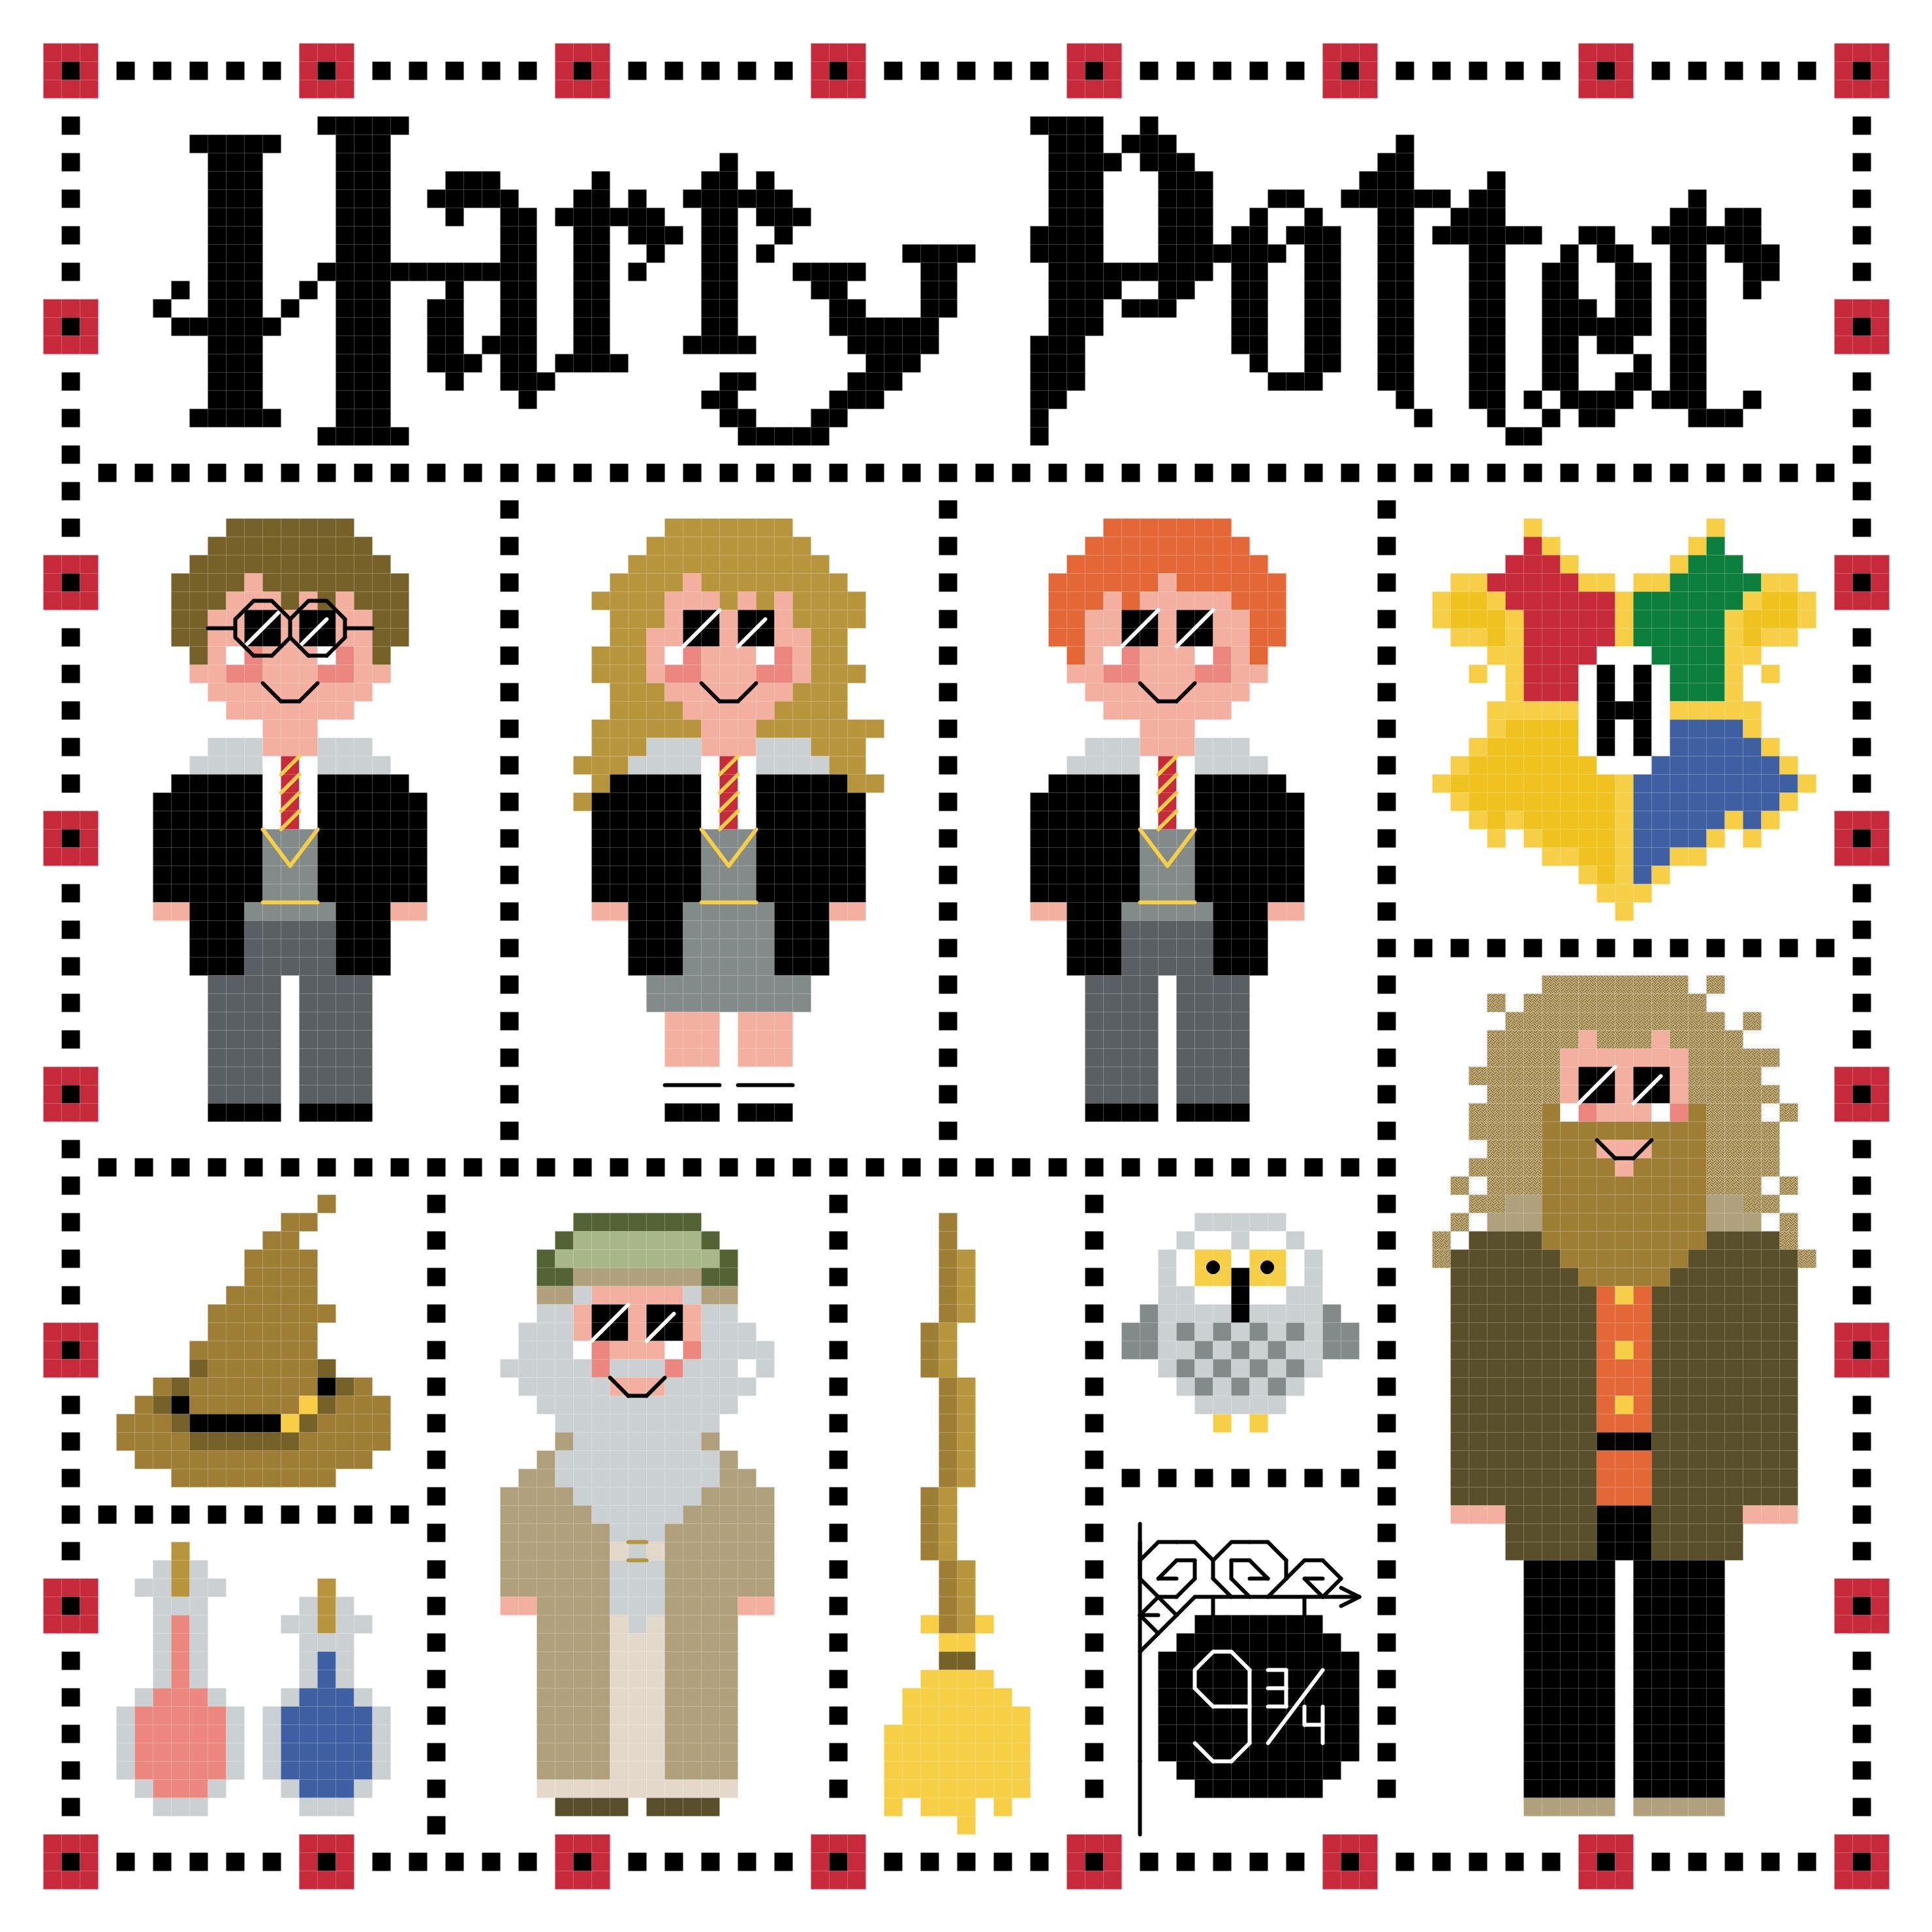 Harry Potter ABC Cross Stitch Pattern